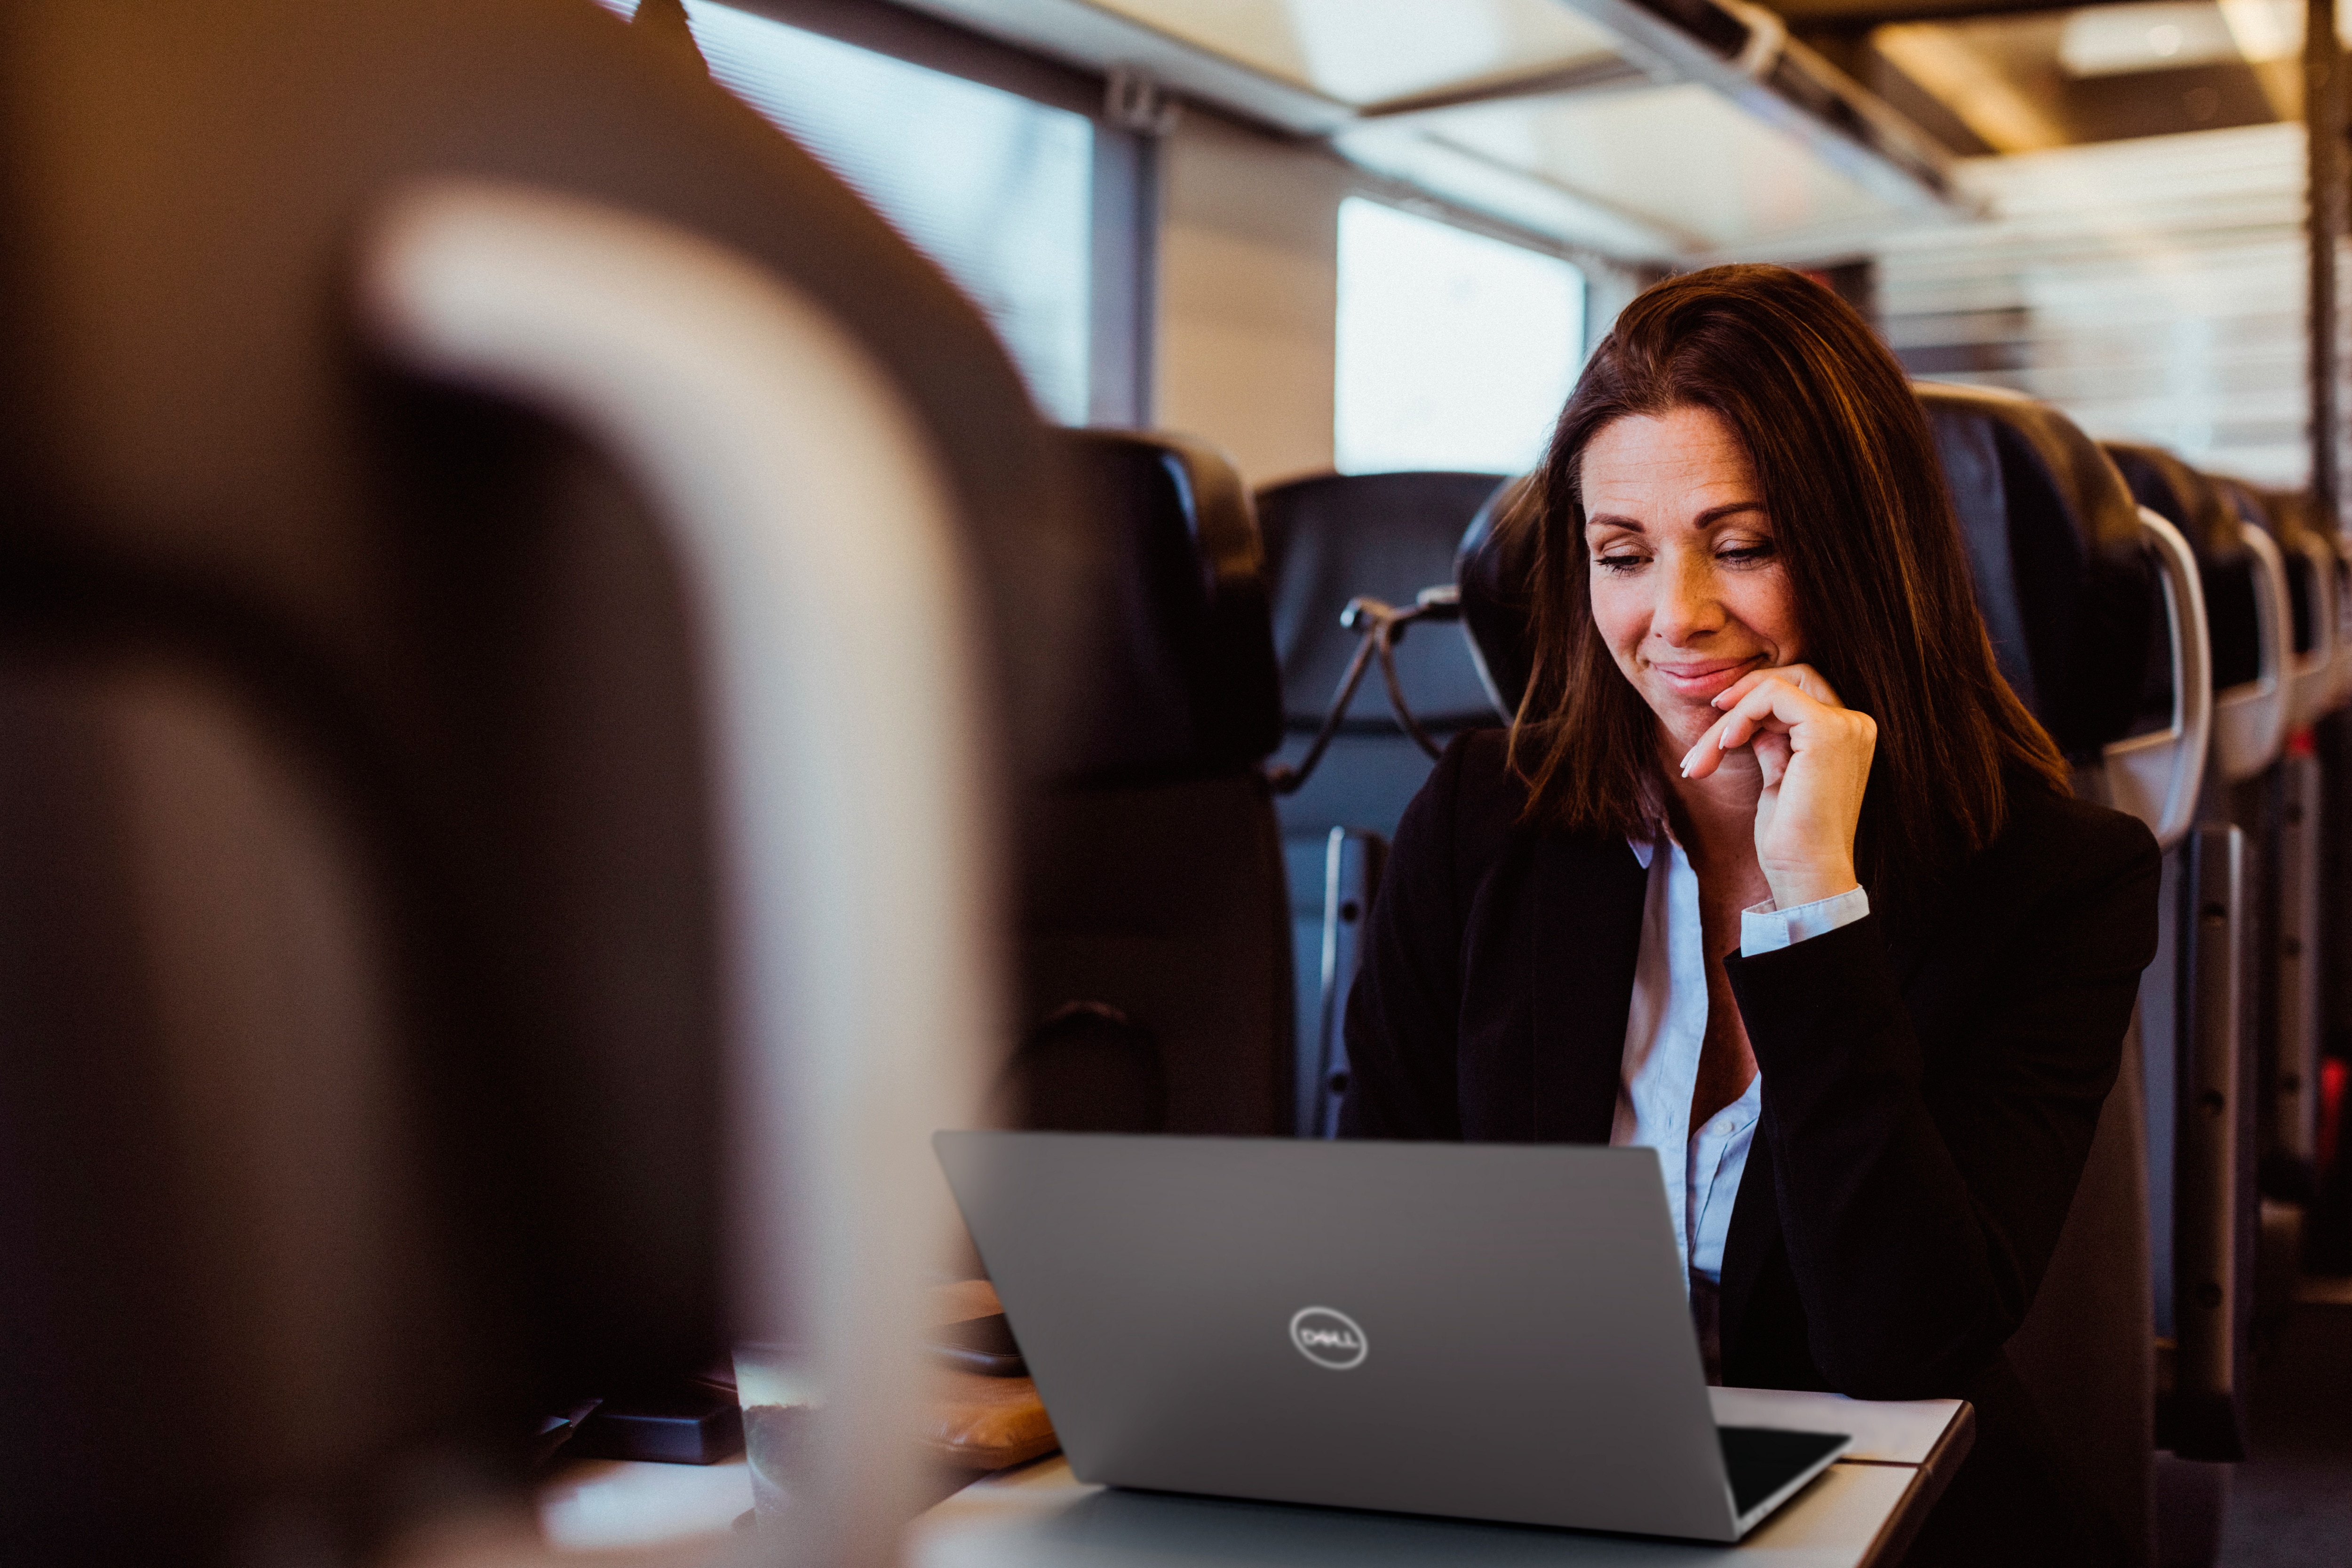 Businesswoman Using Laptop Sitting in Train